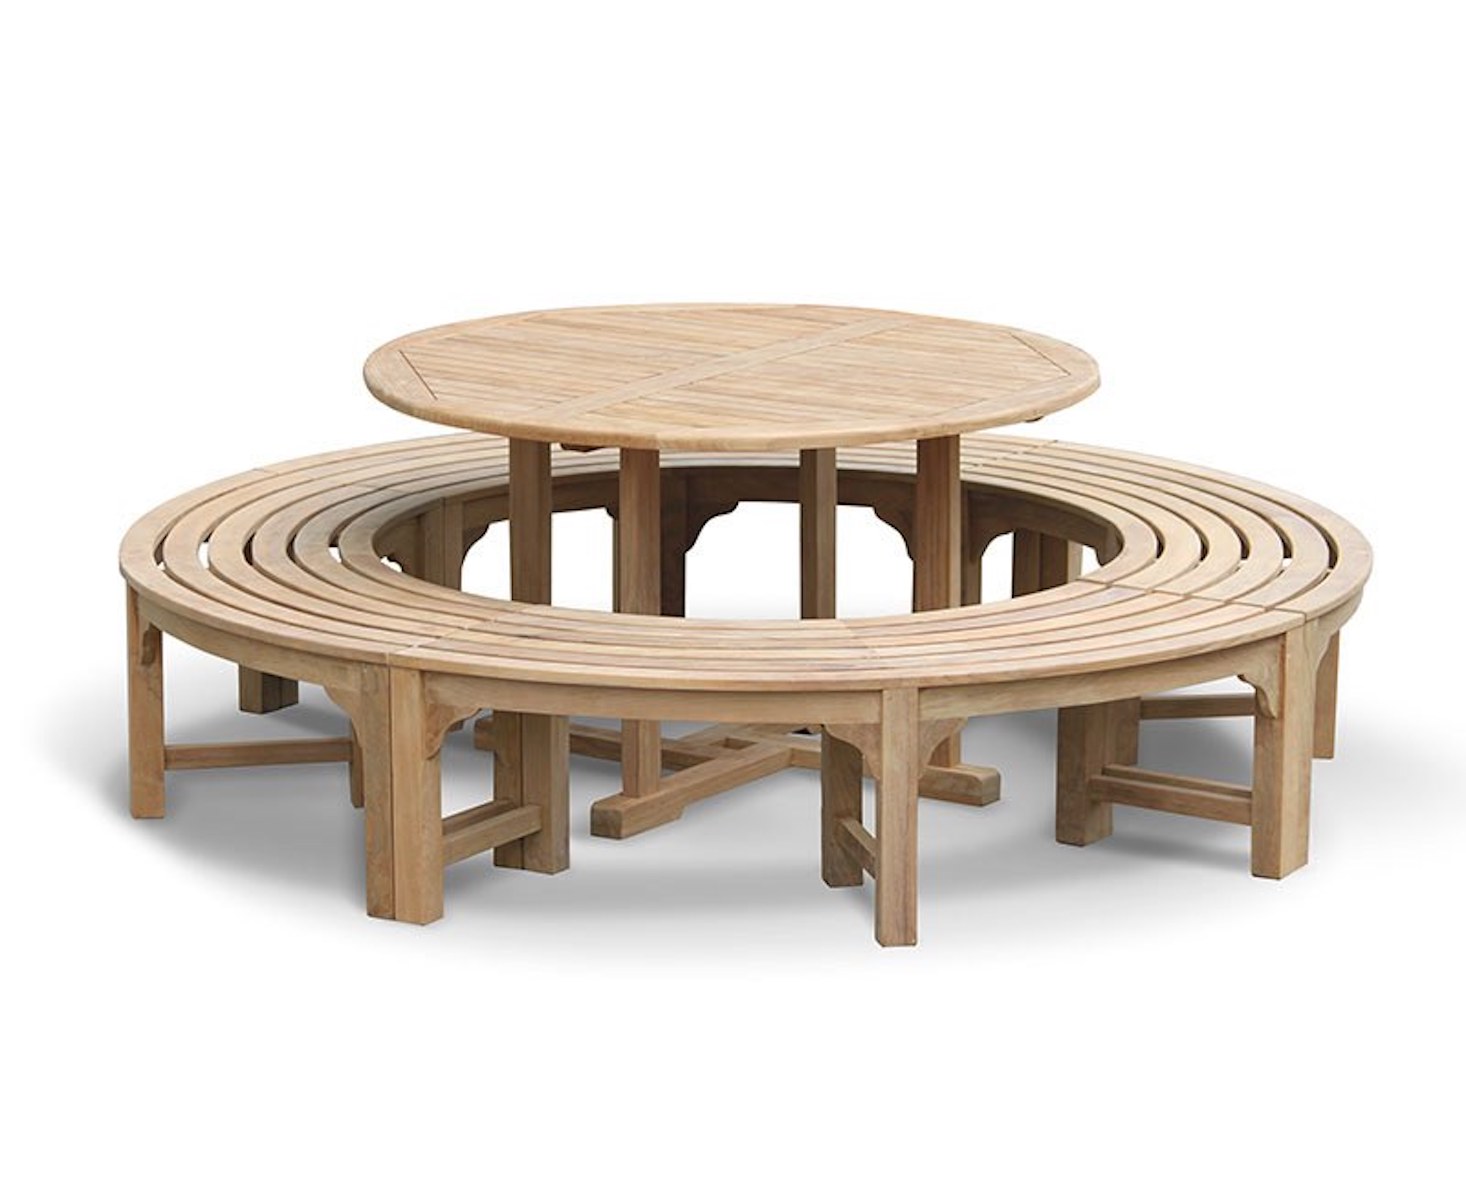 Round-teak-garden-table-dining-benches-set